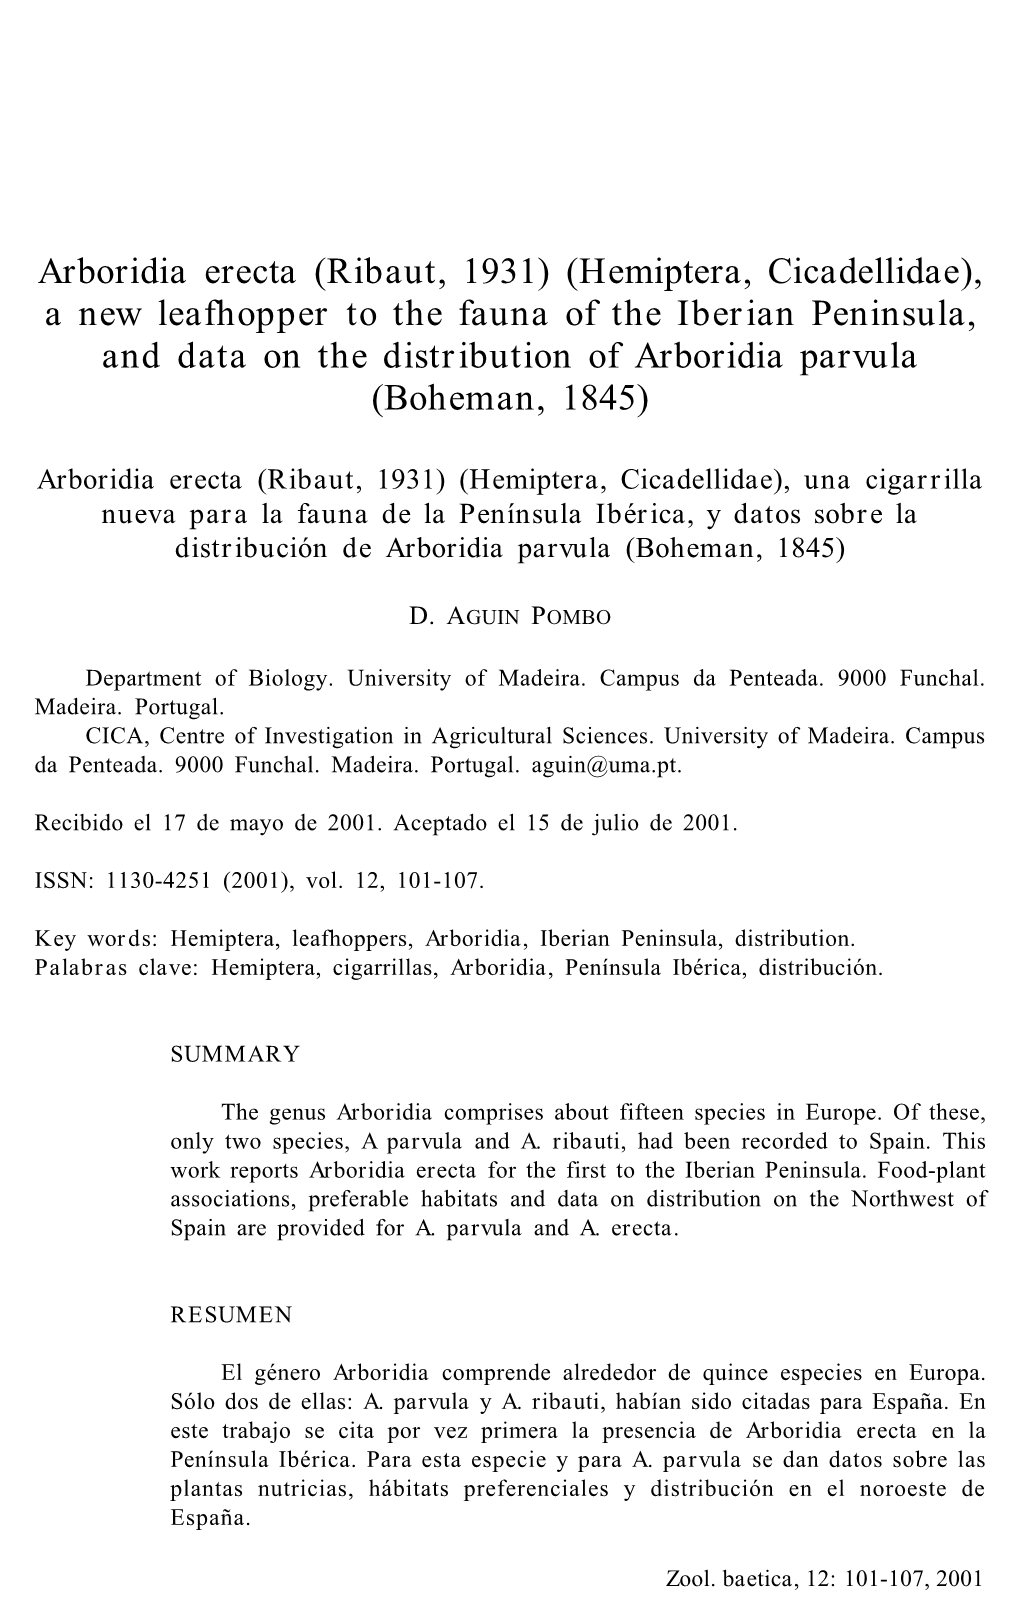 Arboridia Erecta (Ribaut, 1931) (Hemiptera, Cicadellidae), a New